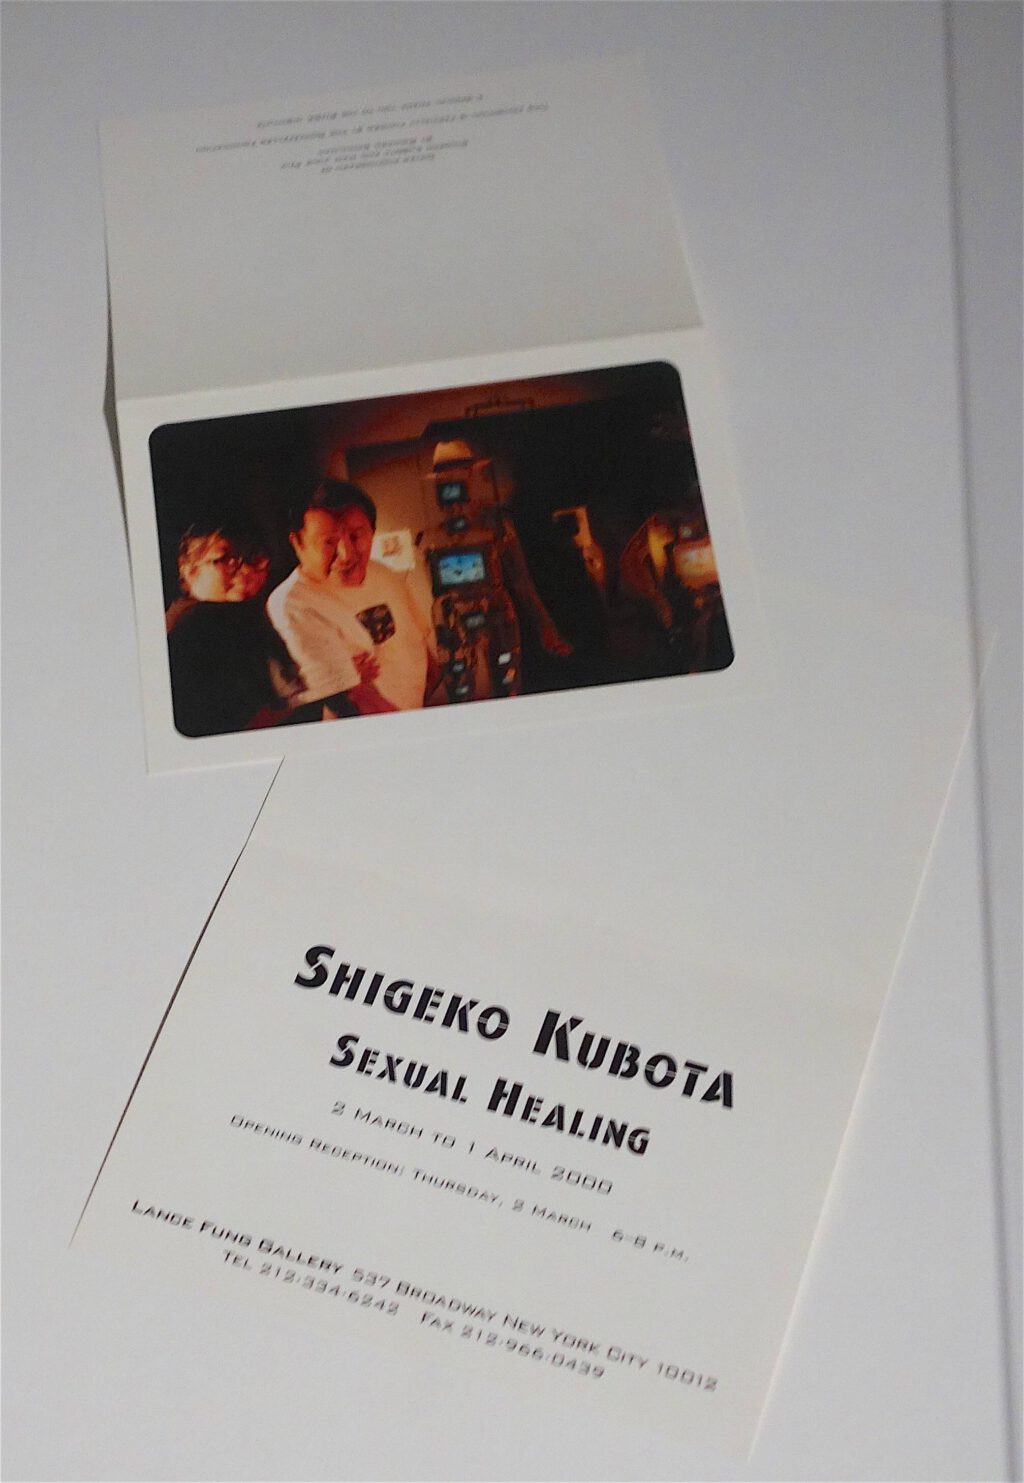 Shigeko Kubota Sexual Healing @ Lance Fung Gallery, Broadway New York City